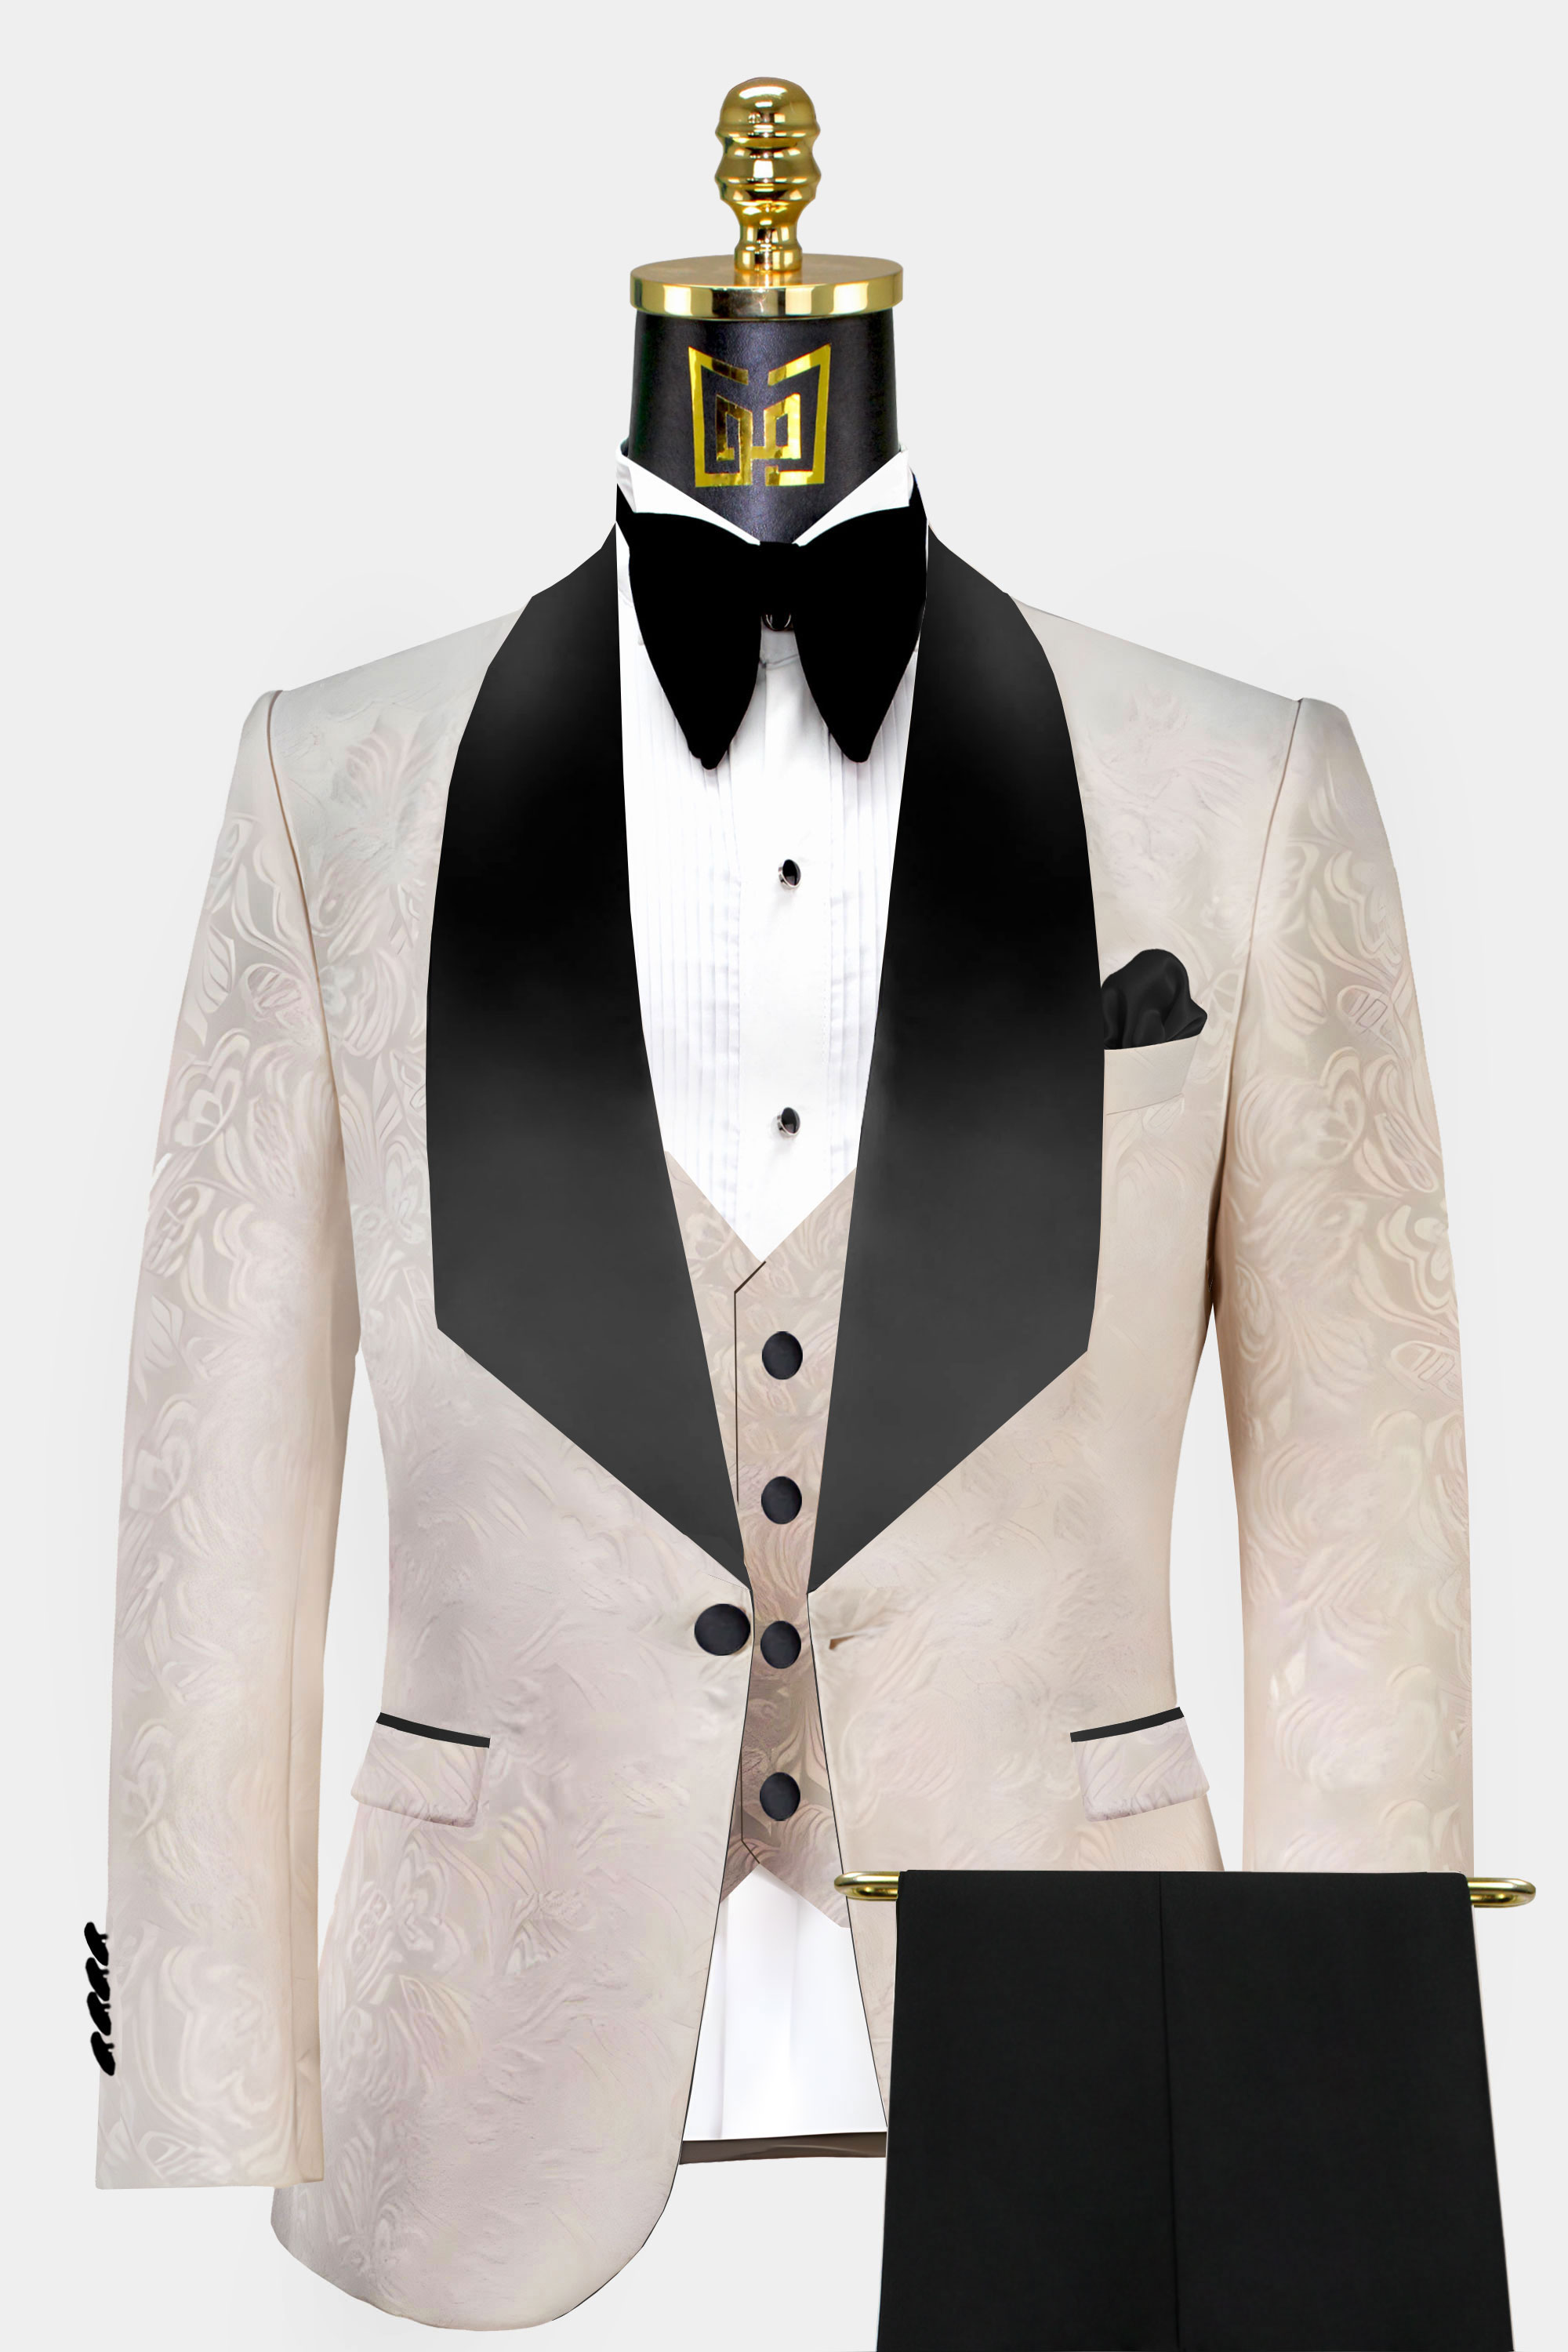 Black-and-Champagne-Tuxedo-Wedding-Groom-Prom-Suit-from-Gentlemansguru.com